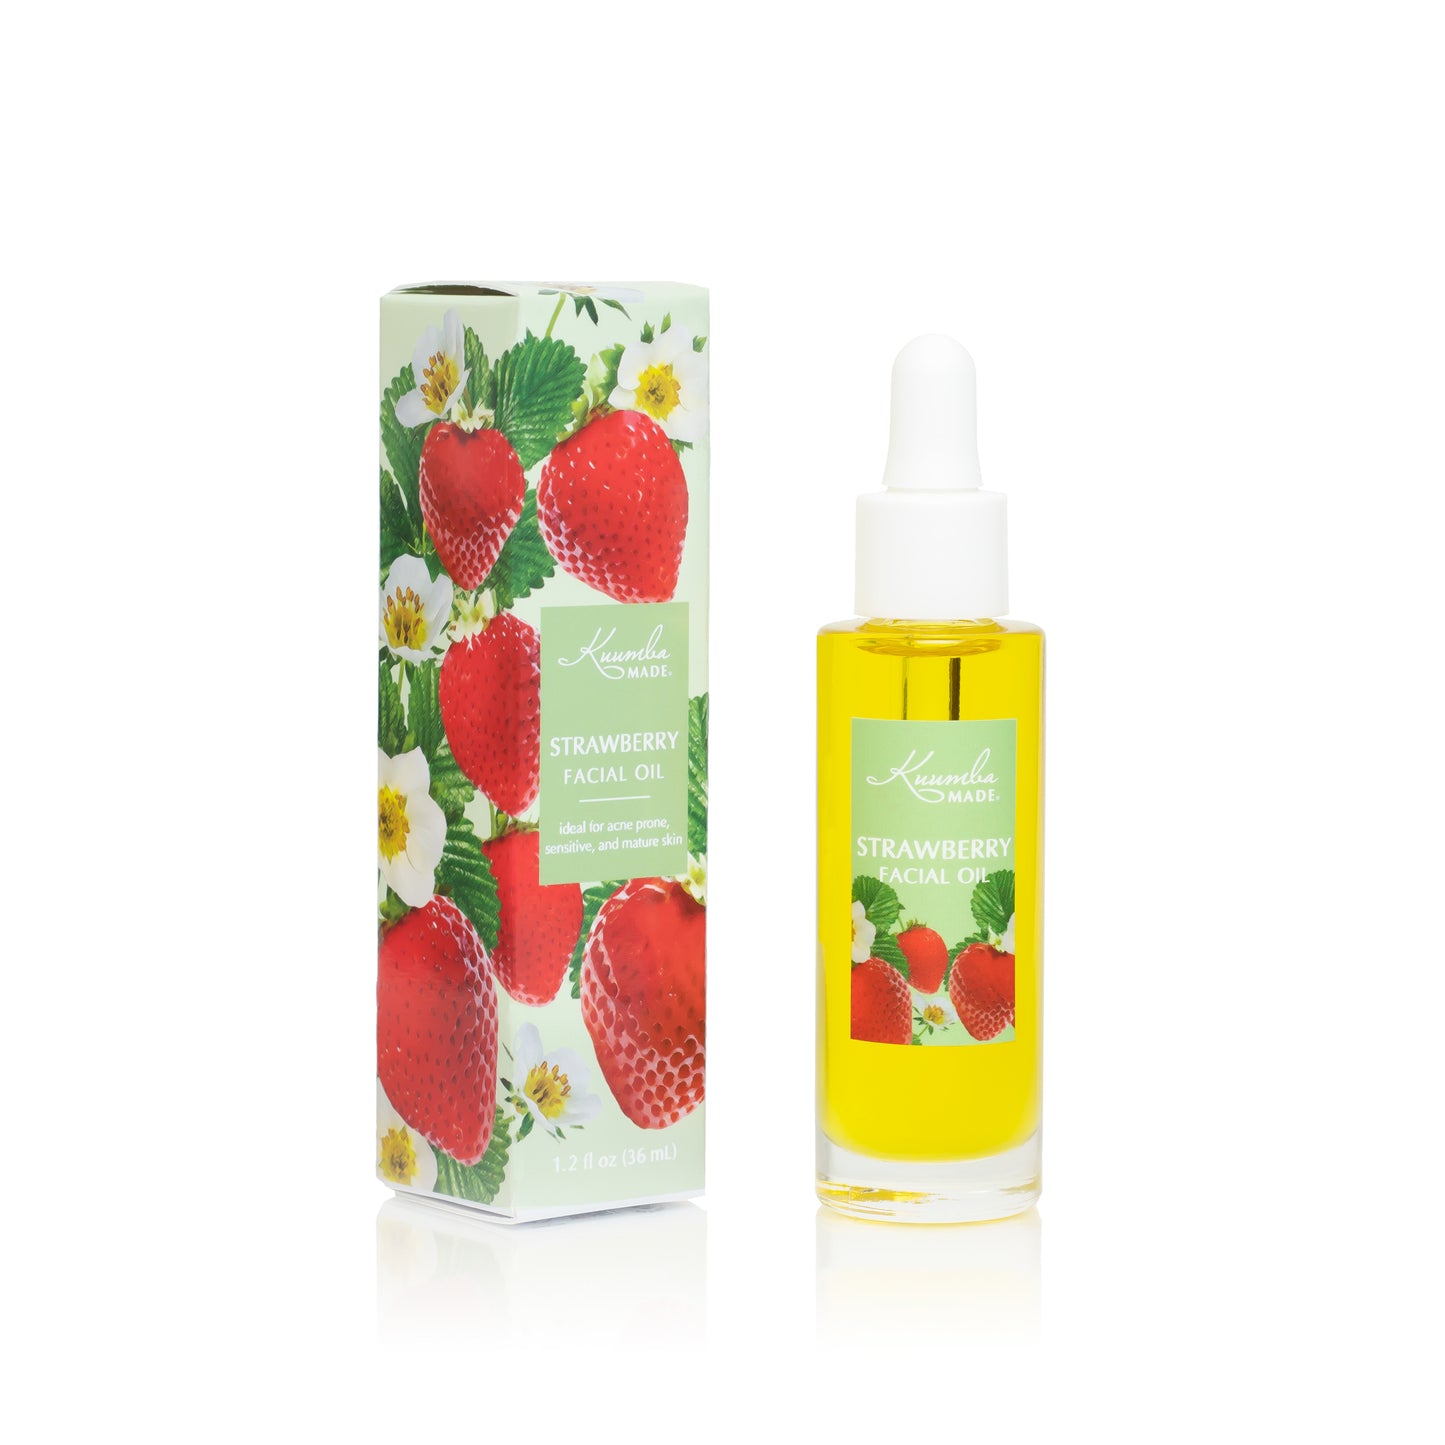 Strawberry Facial Oil